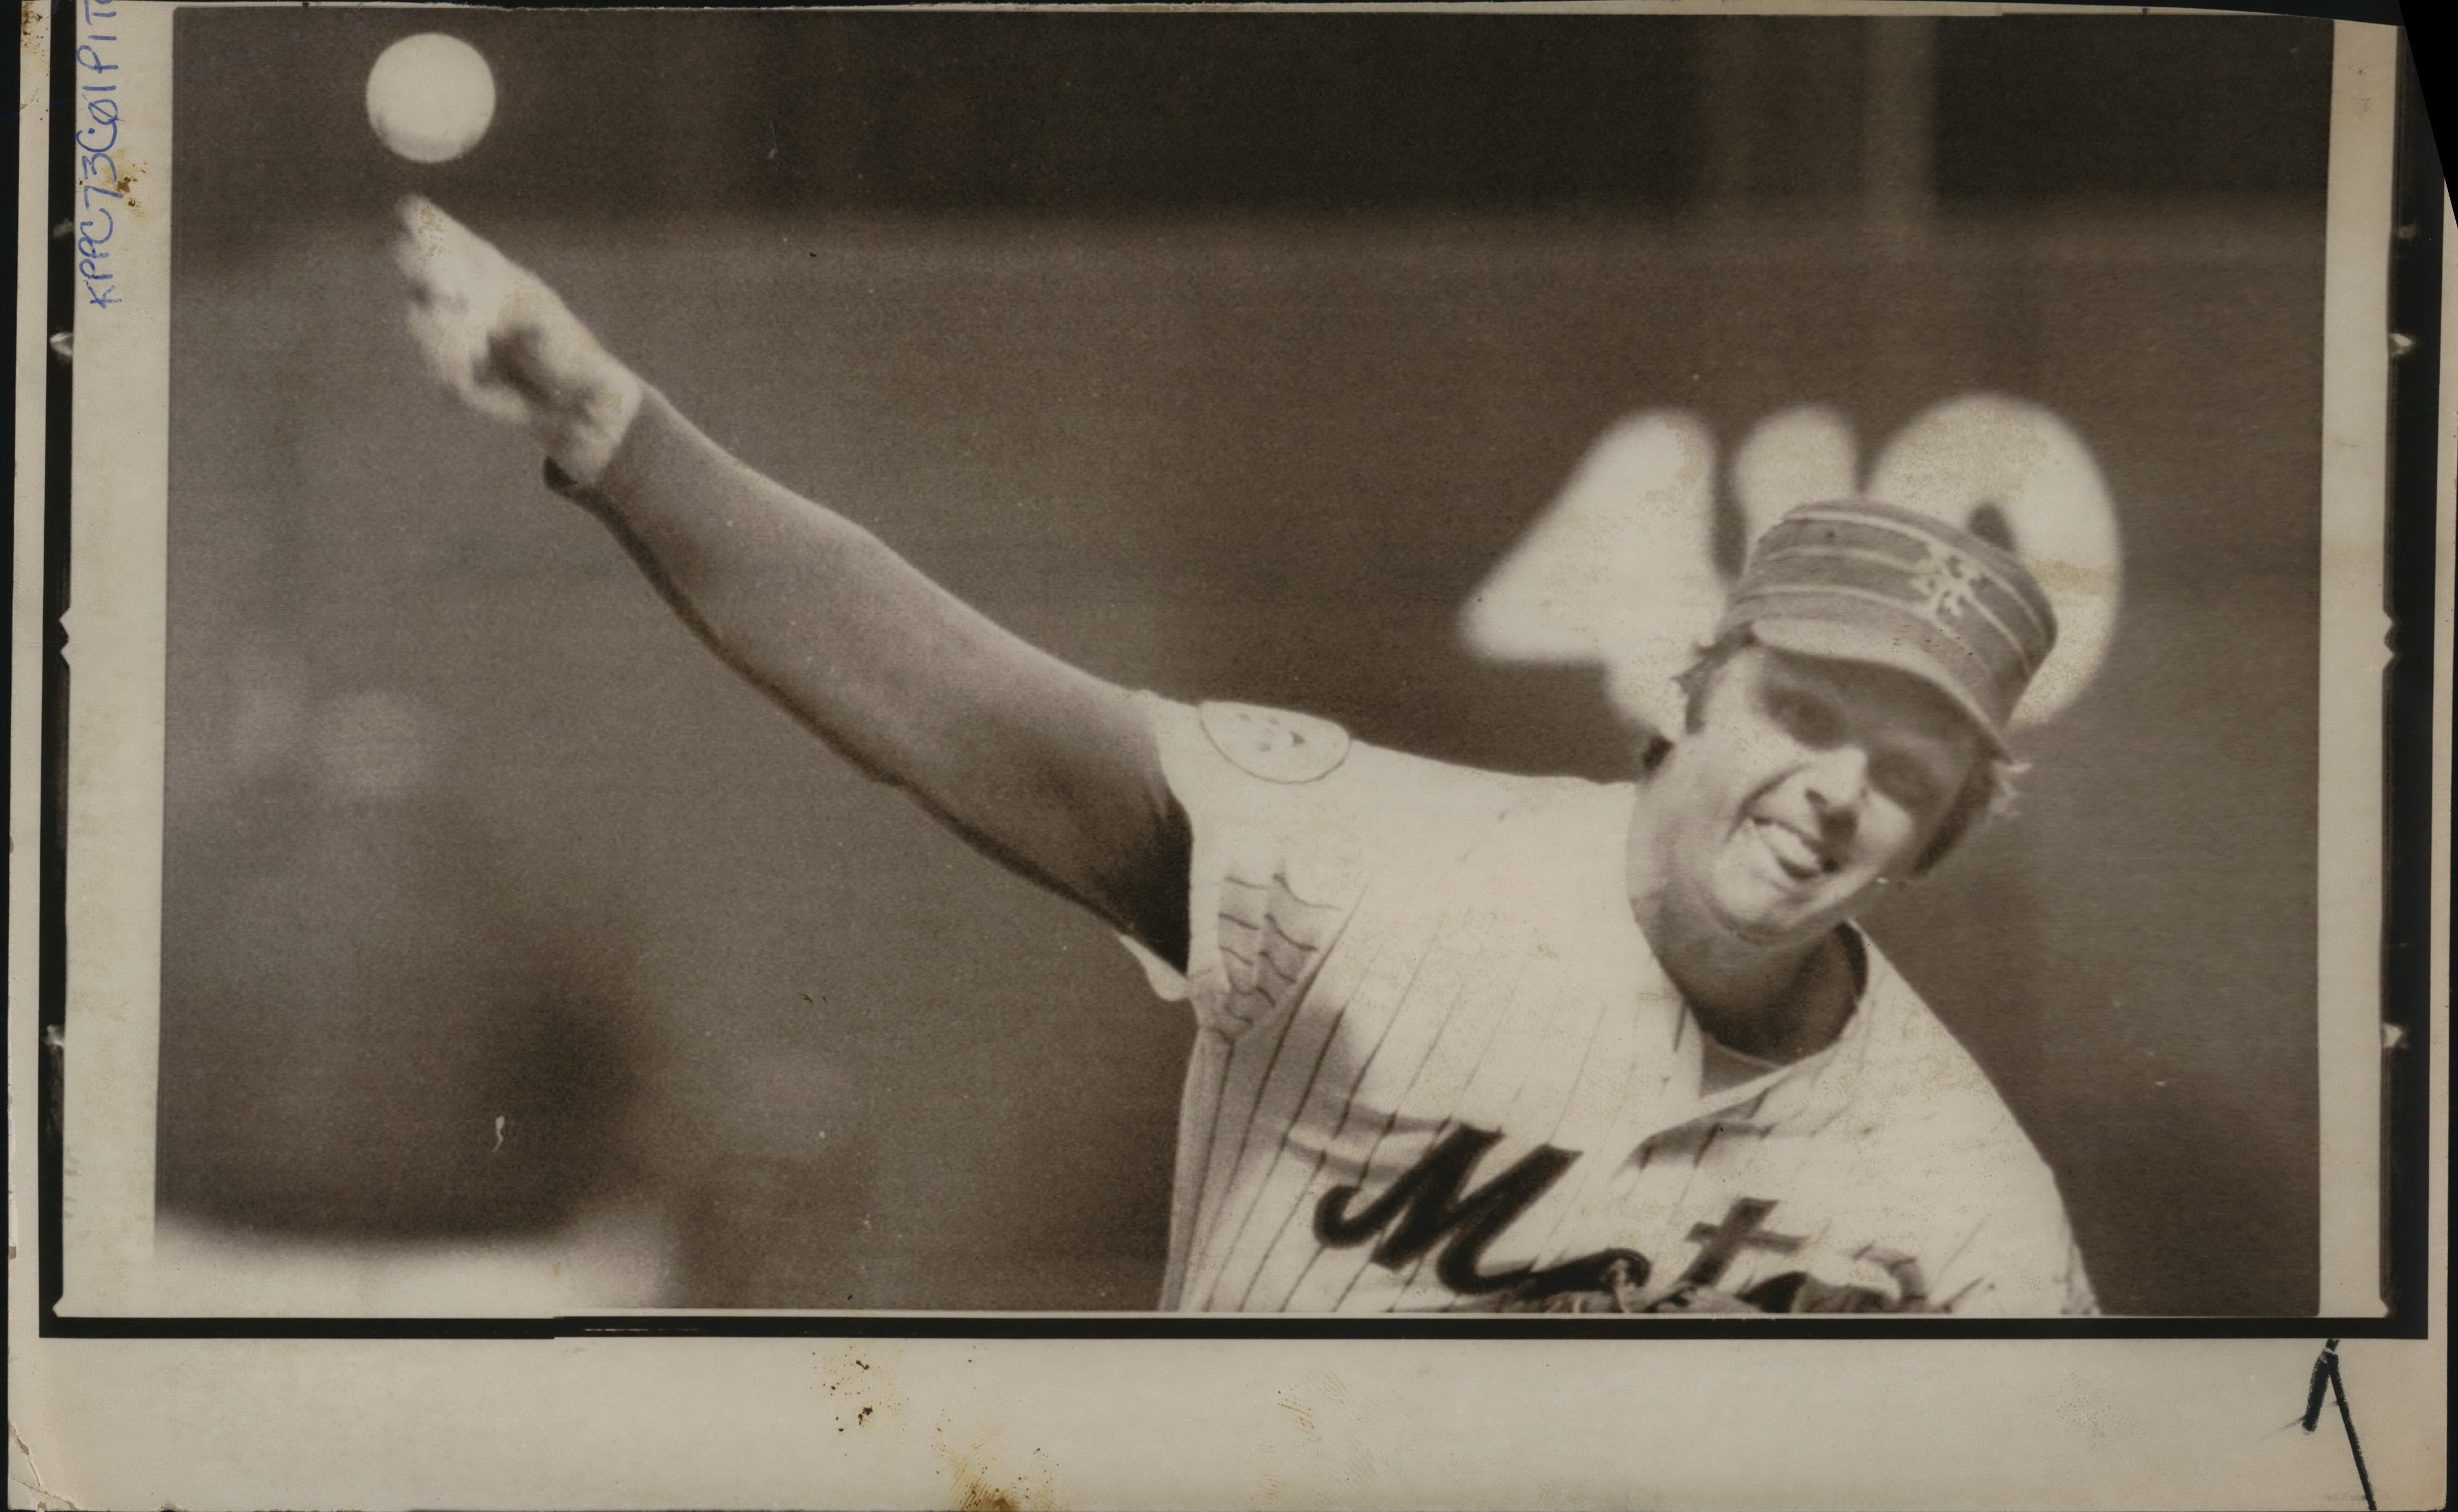 Mets Baseball Legend Tom Seaver Dies At Home In North Bay